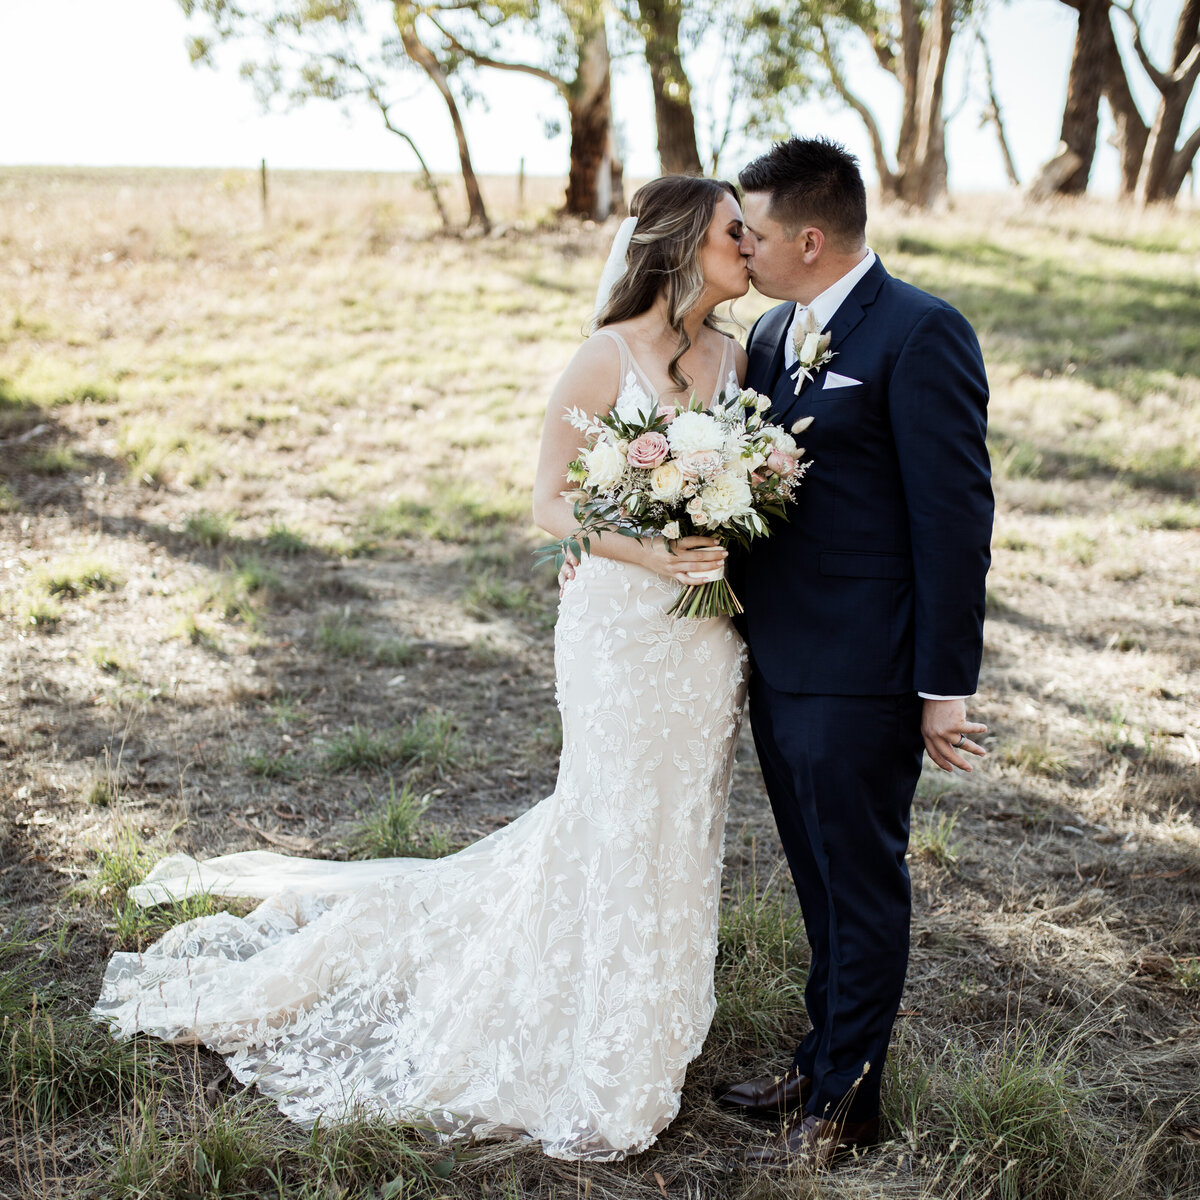 Sam-Scott-Rexvil-Photography-Adelaide-Wedding-Photographer-455